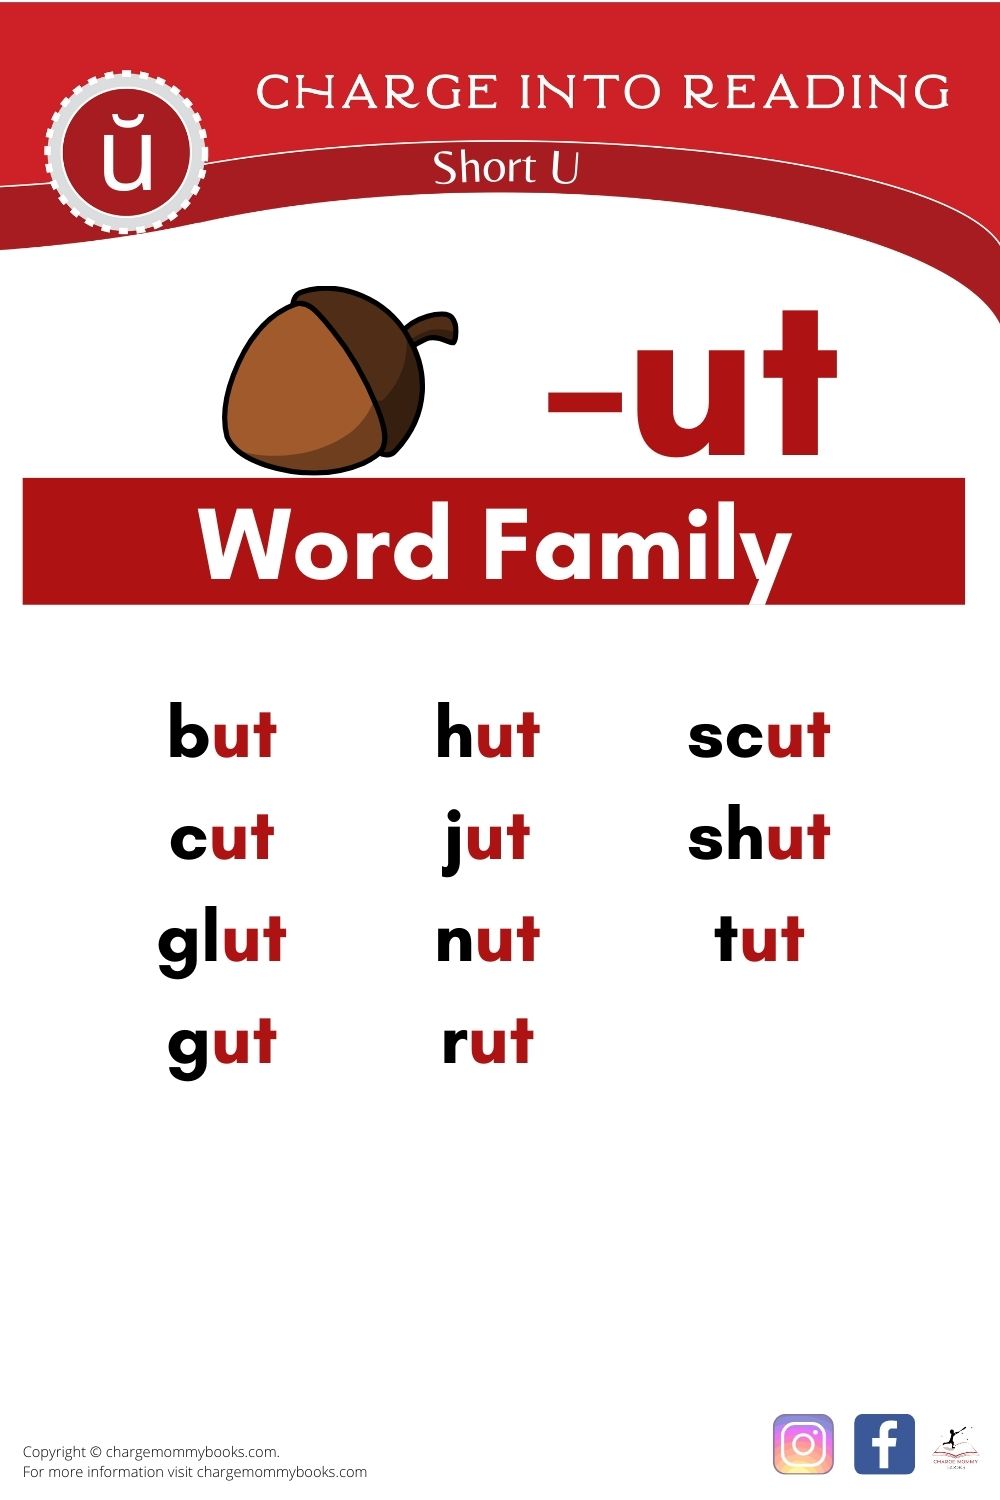 An image showing the short U -ut word familiy